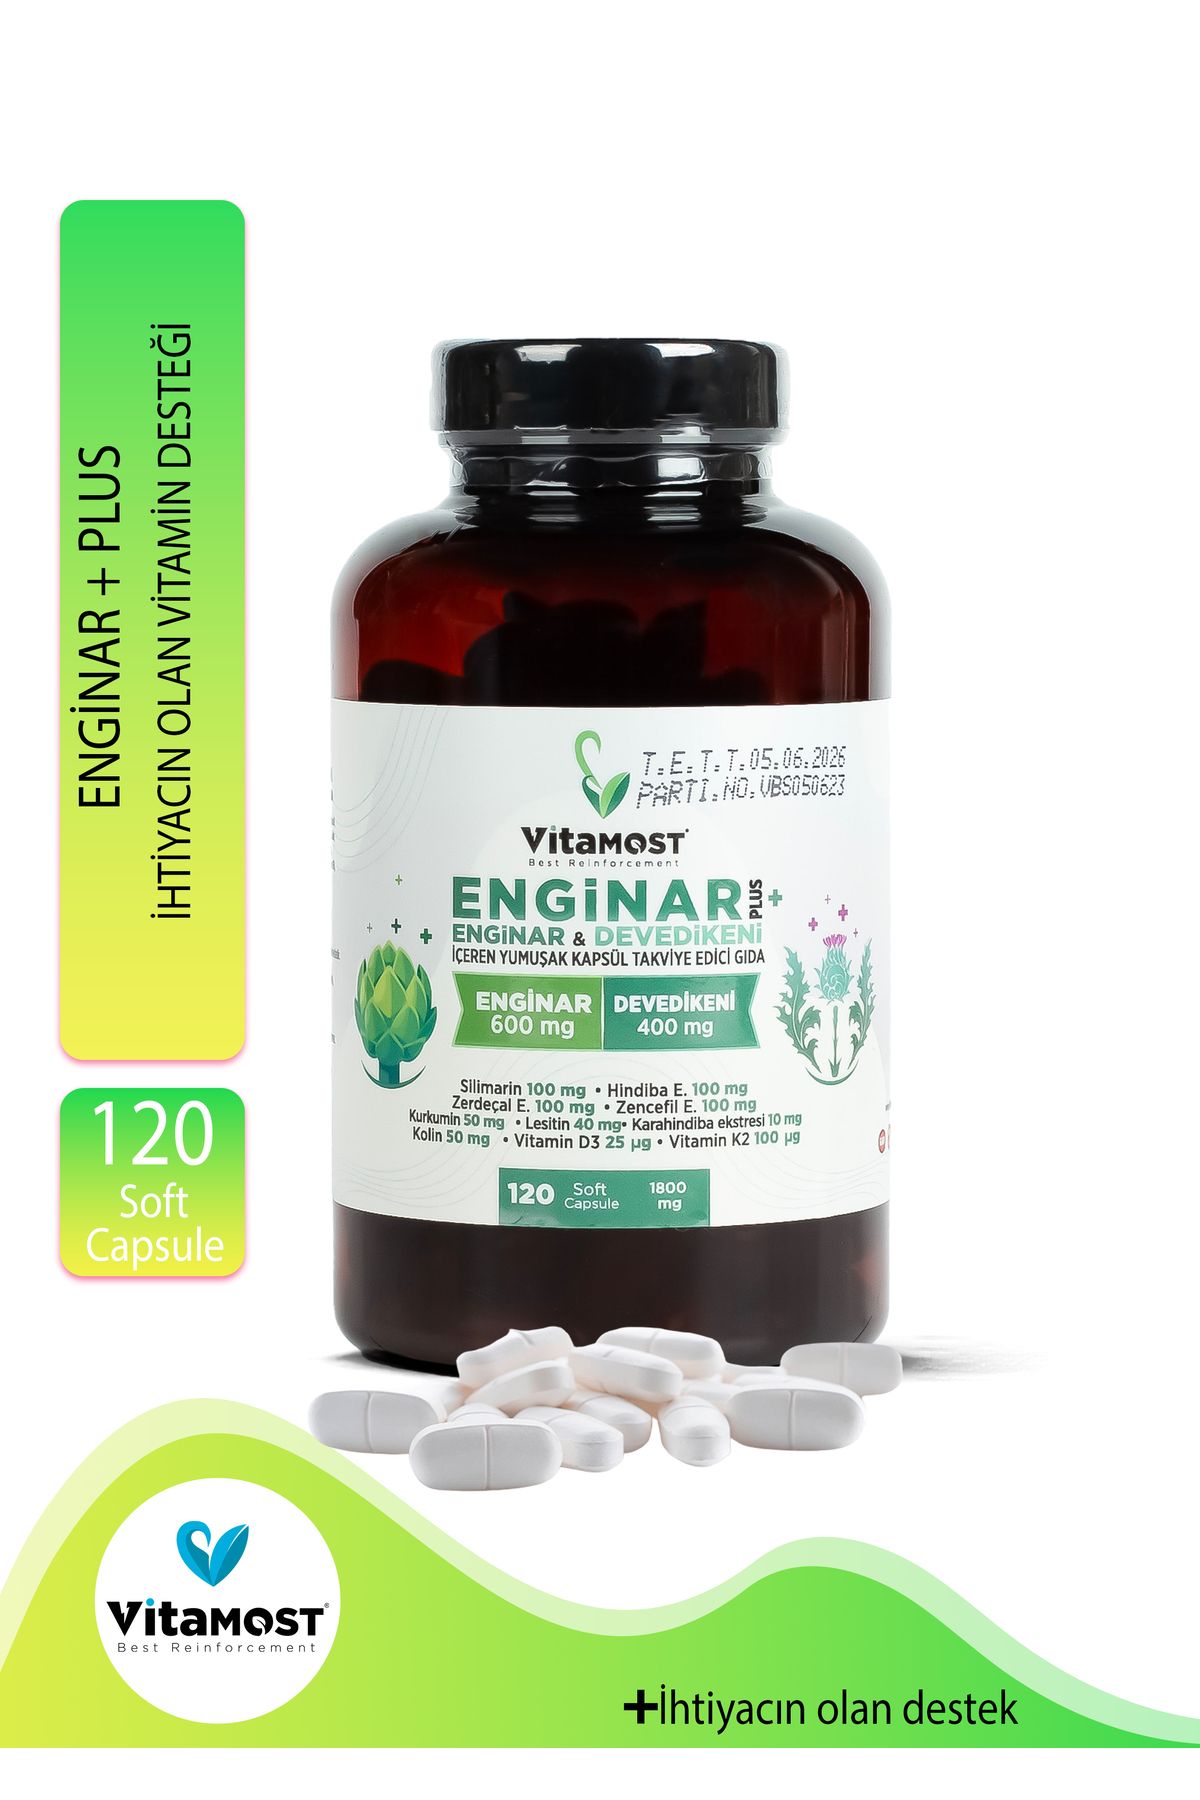 Vitamost Enginar Plus 120 Softcapsule (DEVE DİKENİ HİNDİBA ZERDEÇAL ZENCEFİL) 1800 Mg